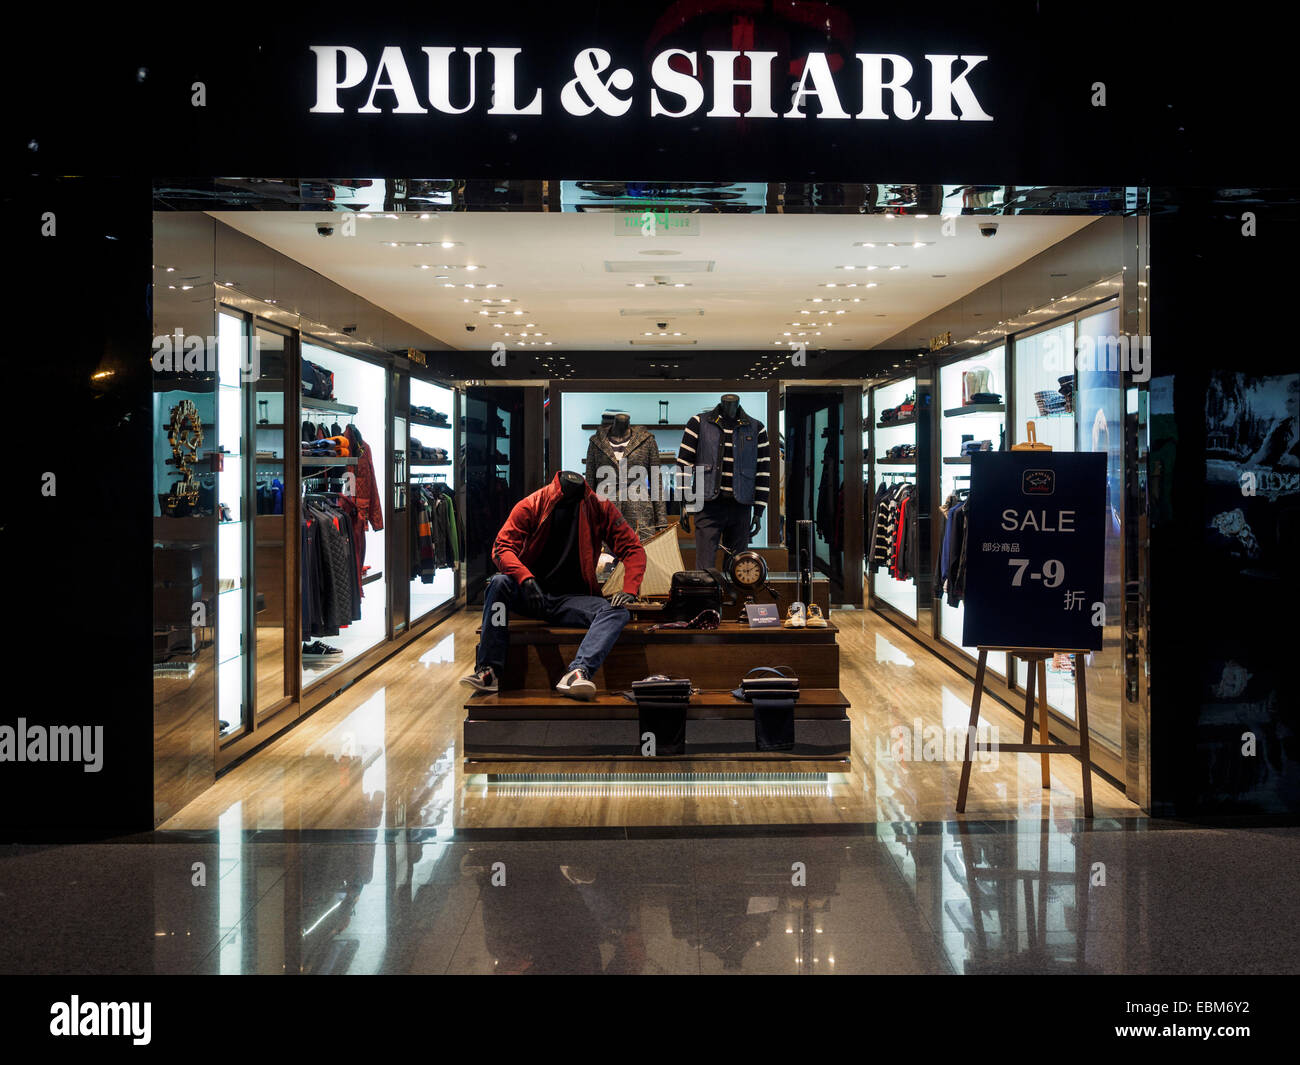 Impressionisme balans Duplicaat Paul & Shark clothing shop Stock Photo - Alamy